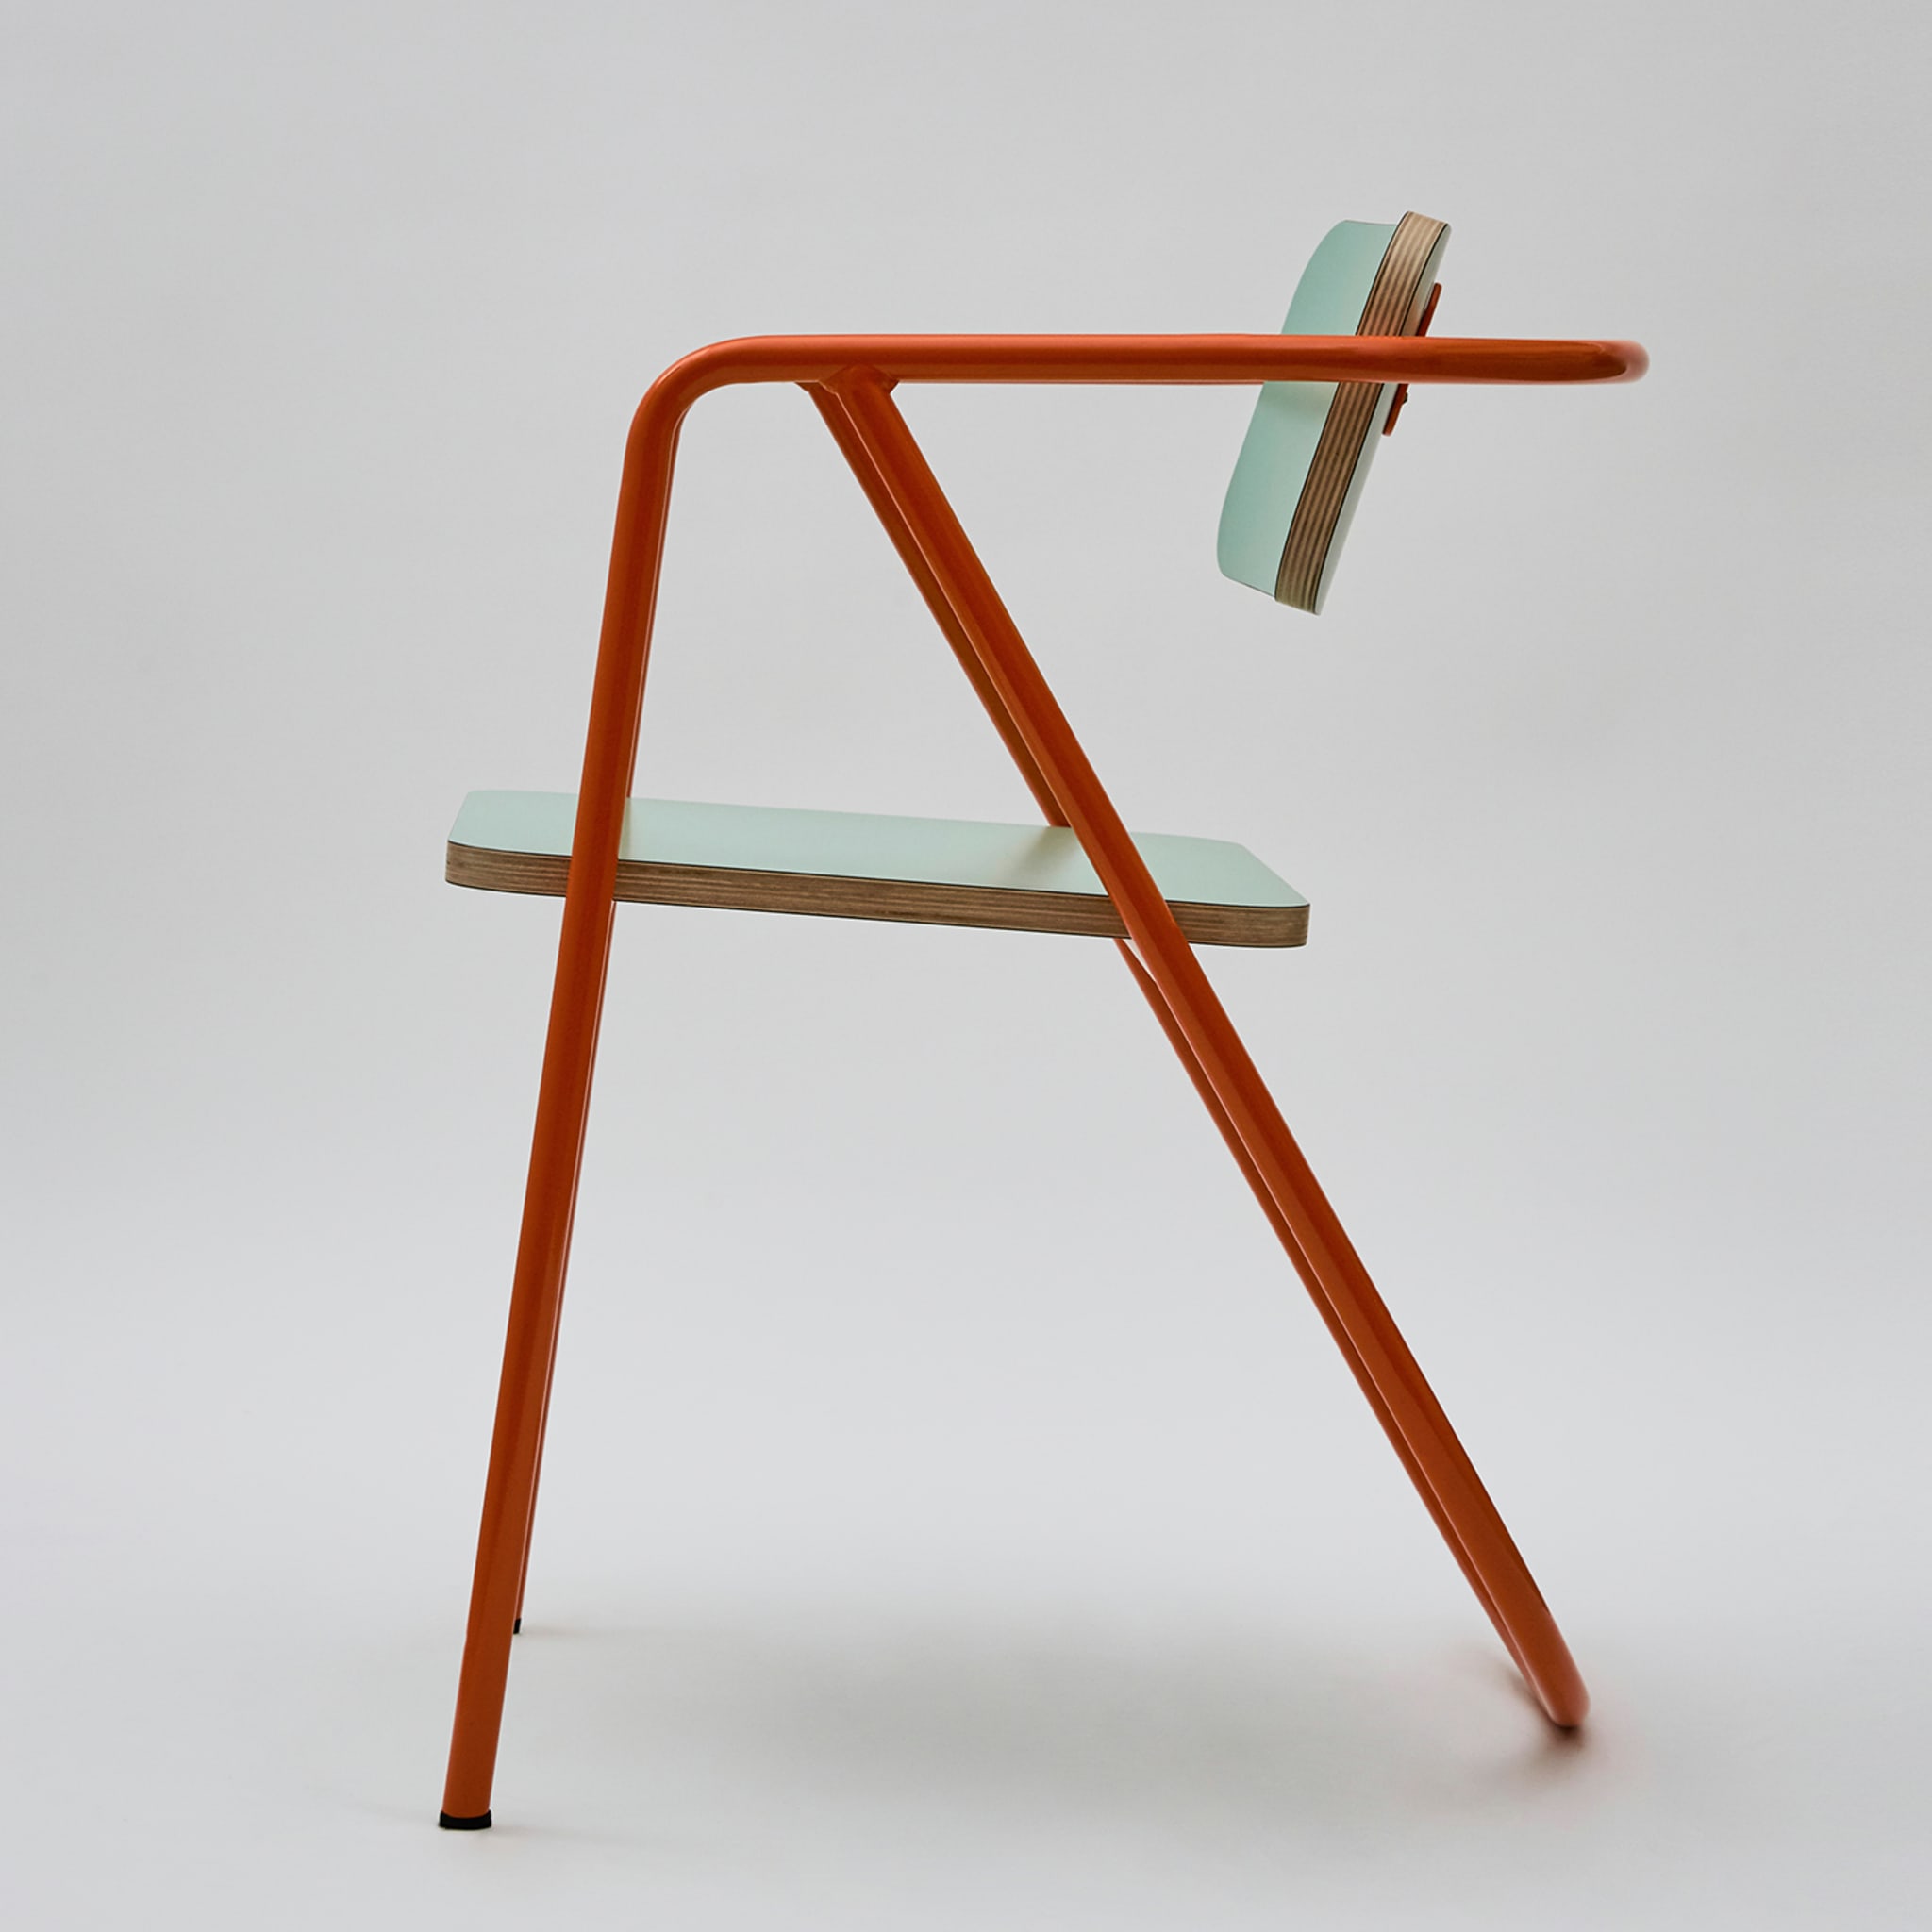 La Misciù Orange & Teal Chair - Alternative view 3